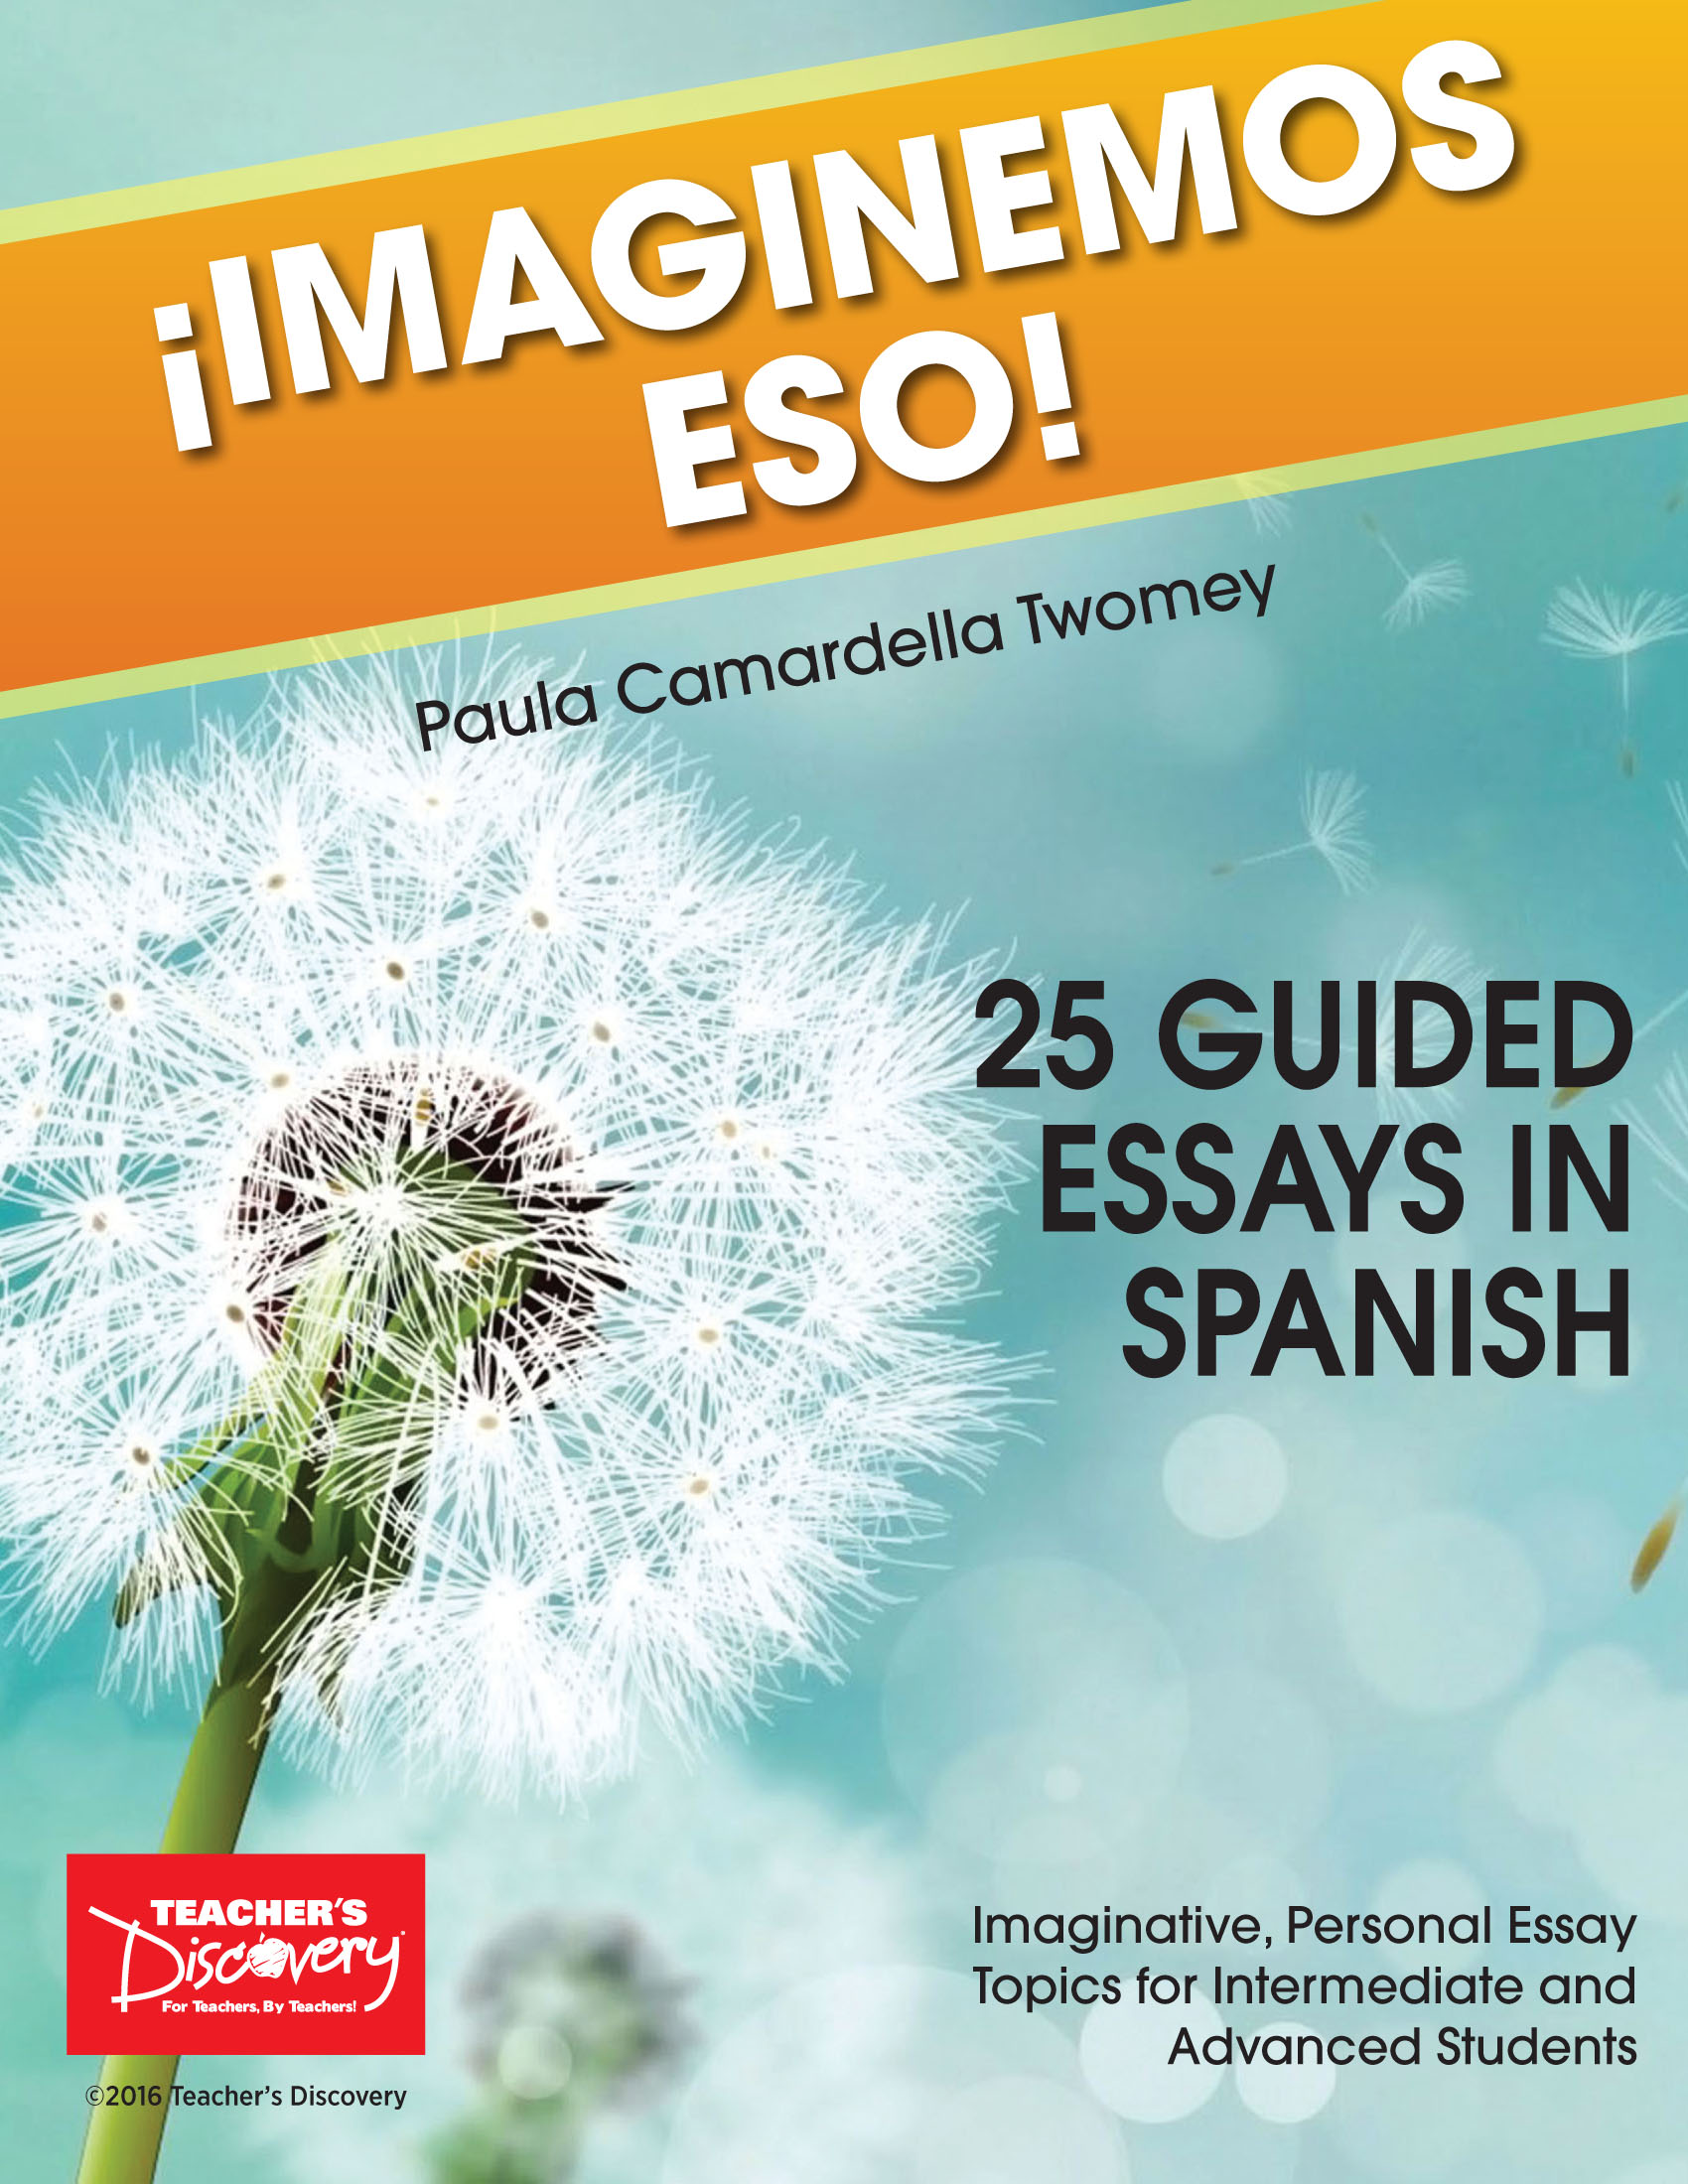 ¡Imaginemos eso! 25 Guided Essays in Spanish Book